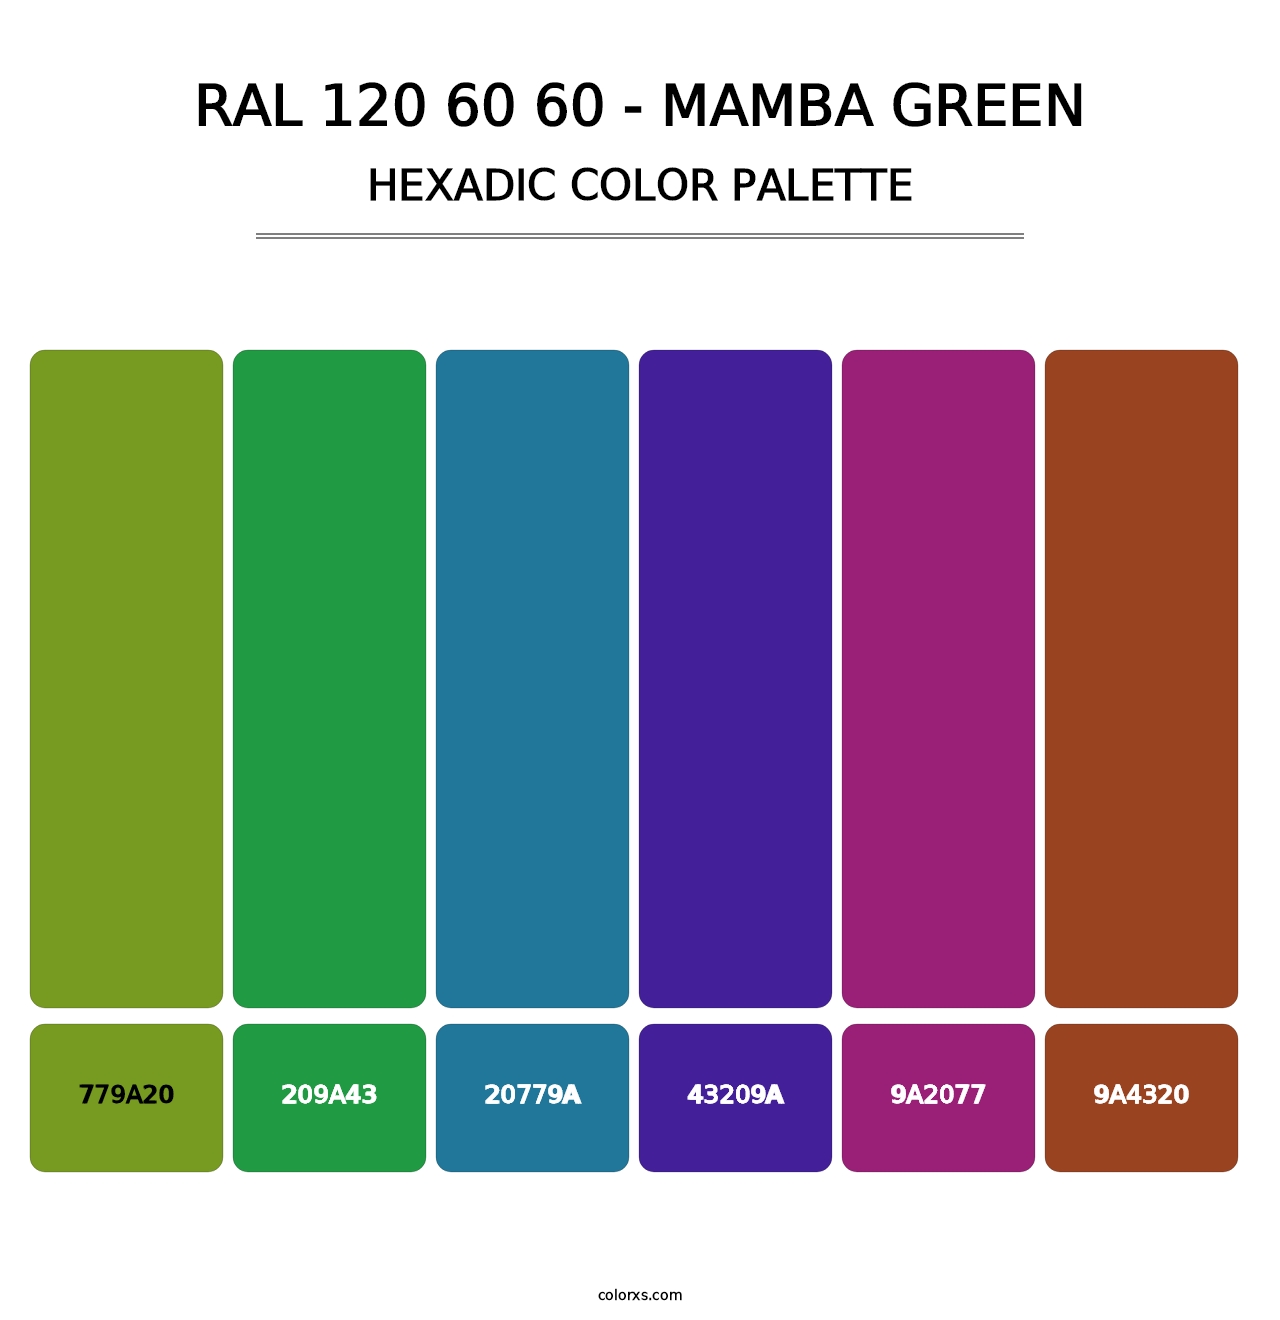 RAL 120 60 60 - Mamba Green - Hexadic Color Palette